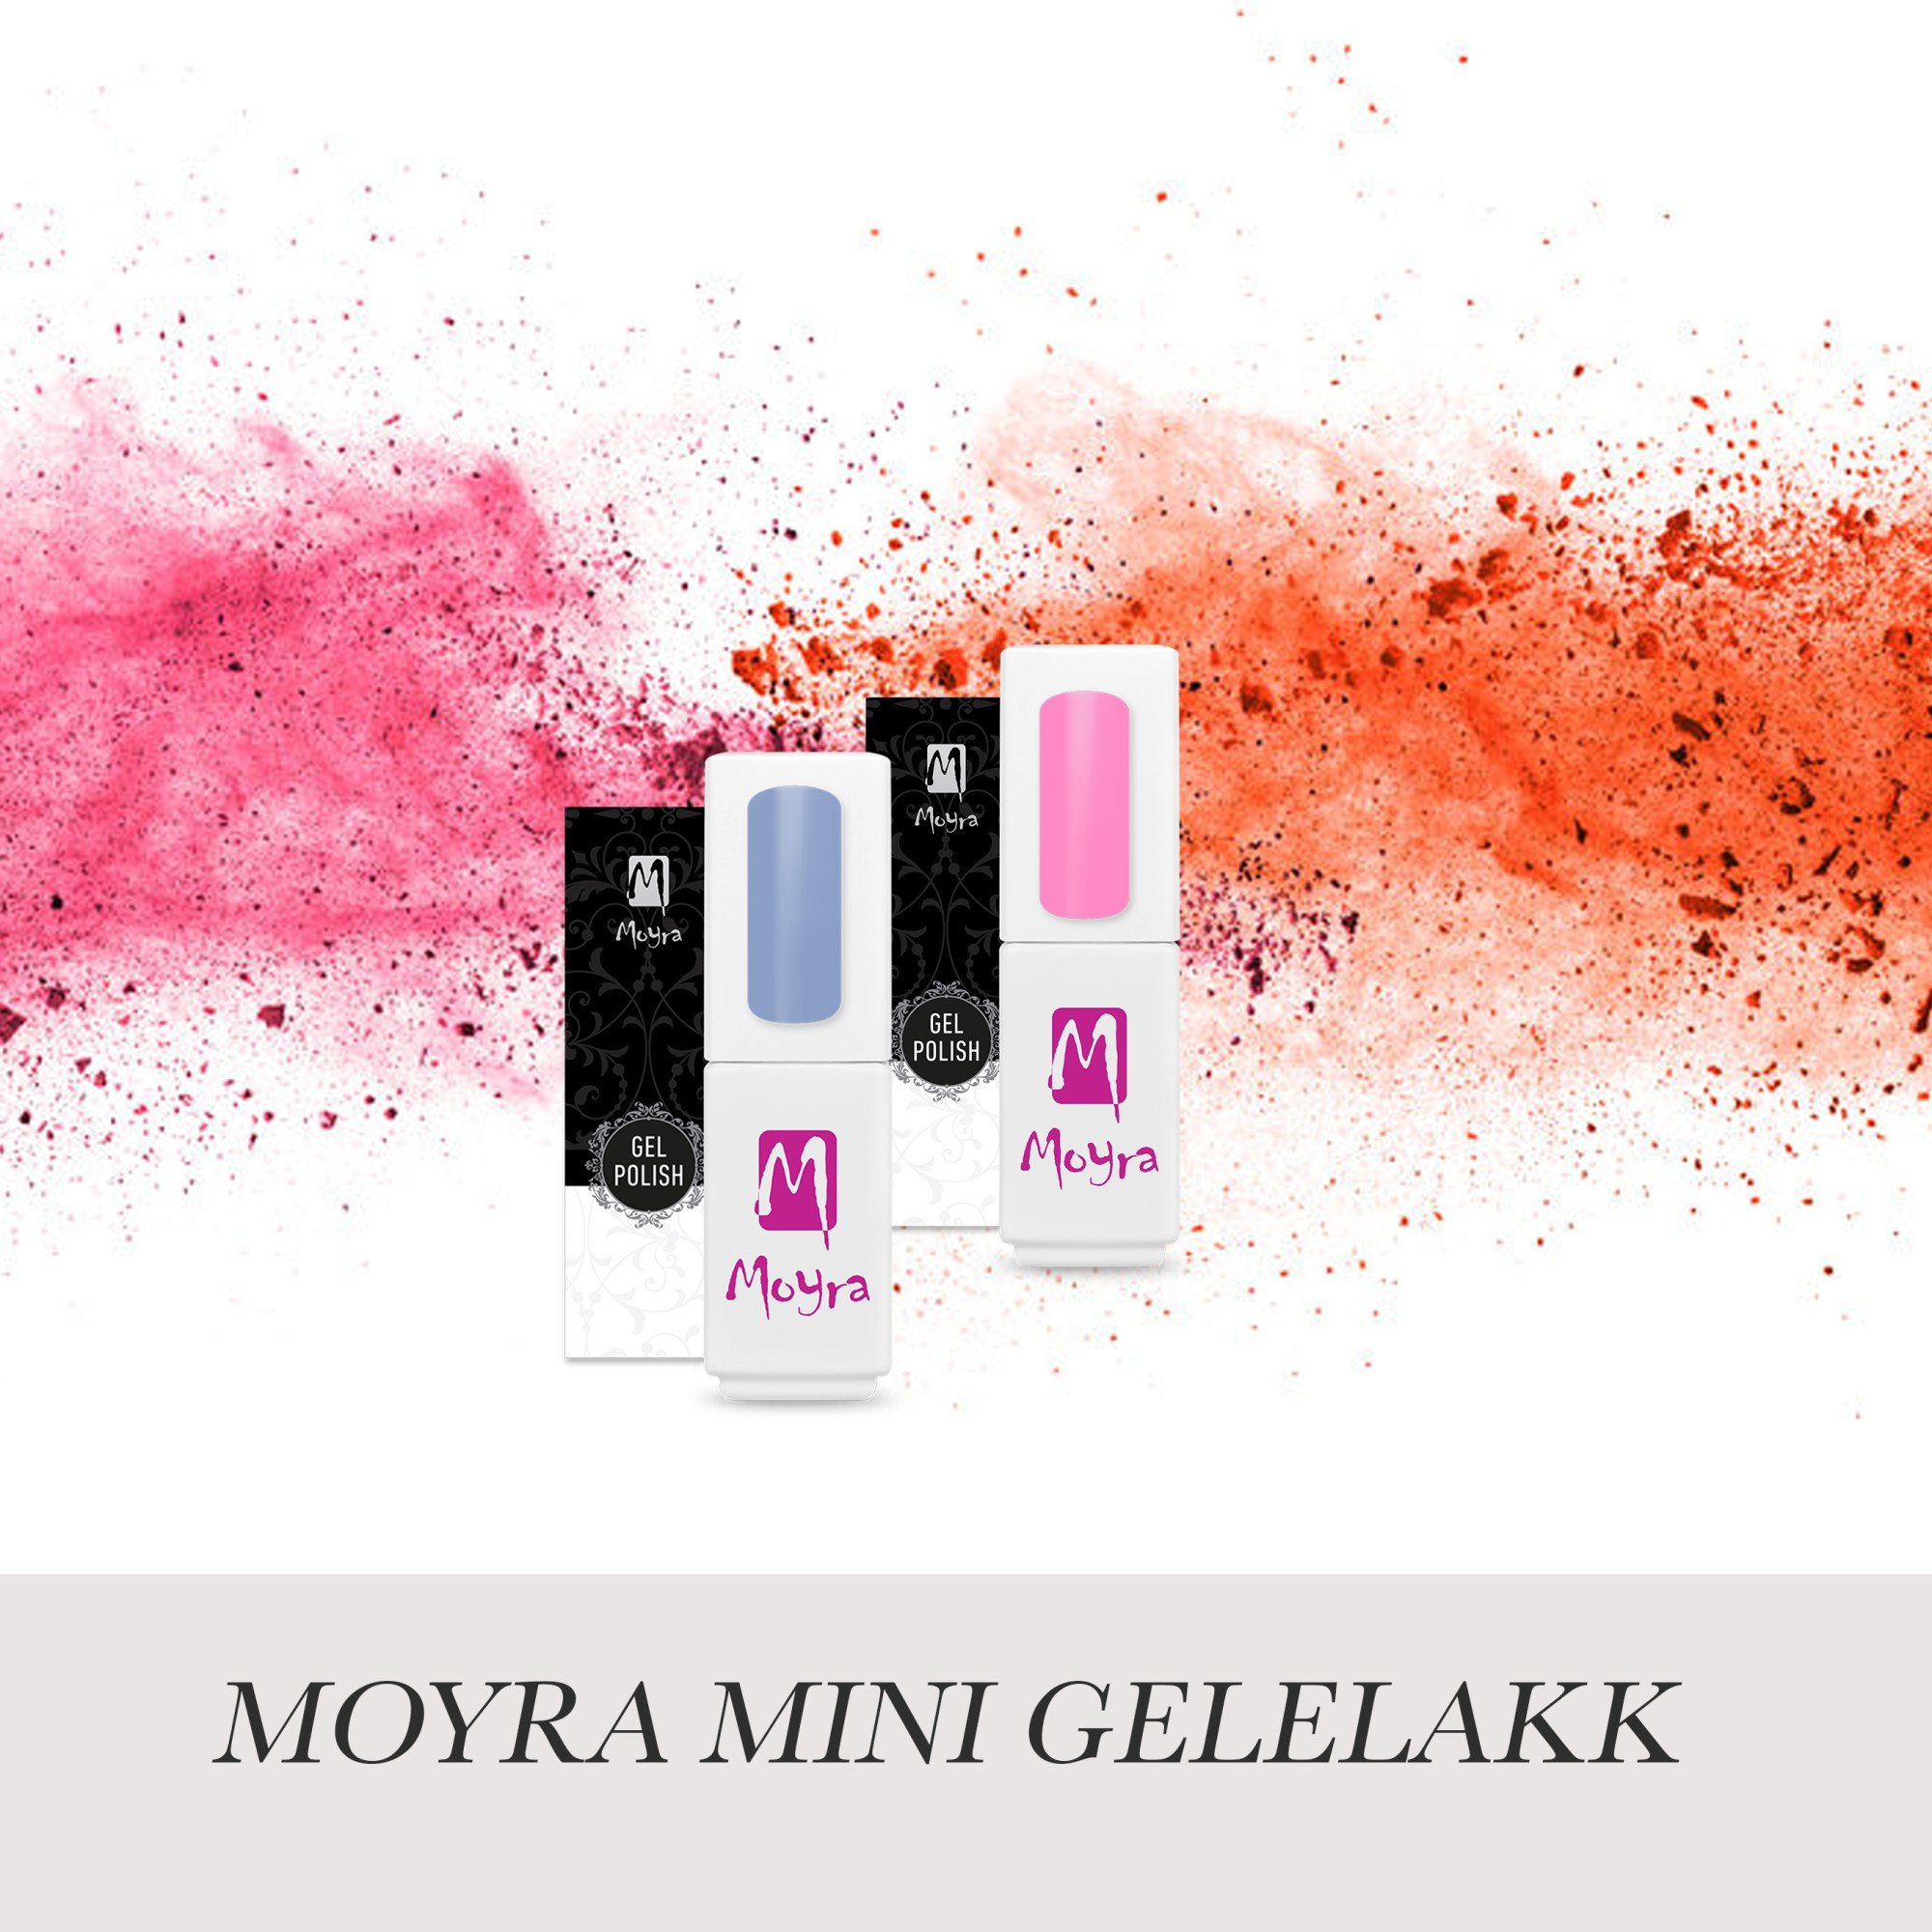 Moyra Mini Gelelakk - Briis AS